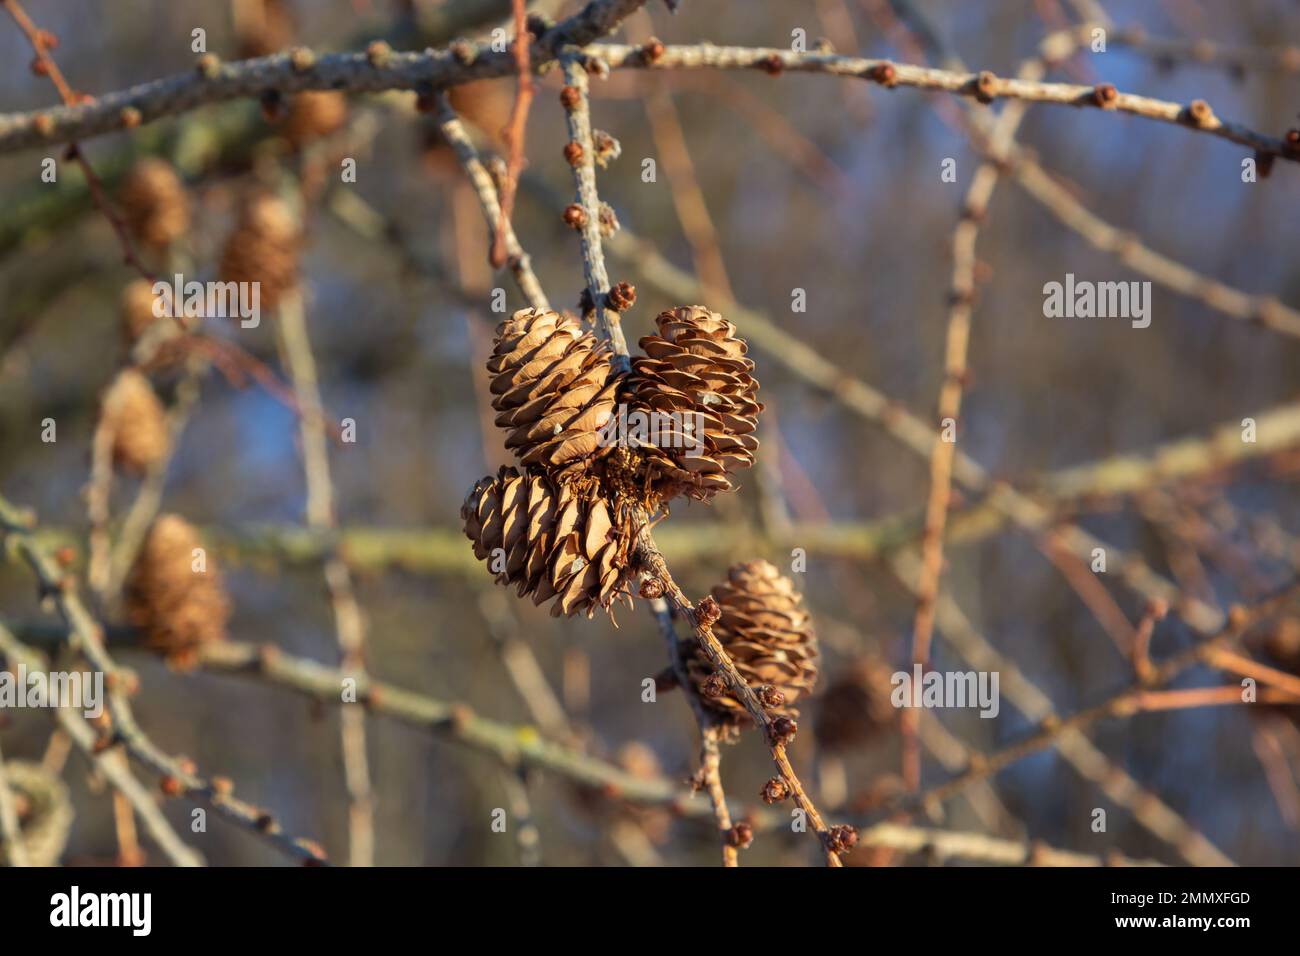 European larch, Larix decidua, tree, detail of branch with cones in winter. Stock Photo